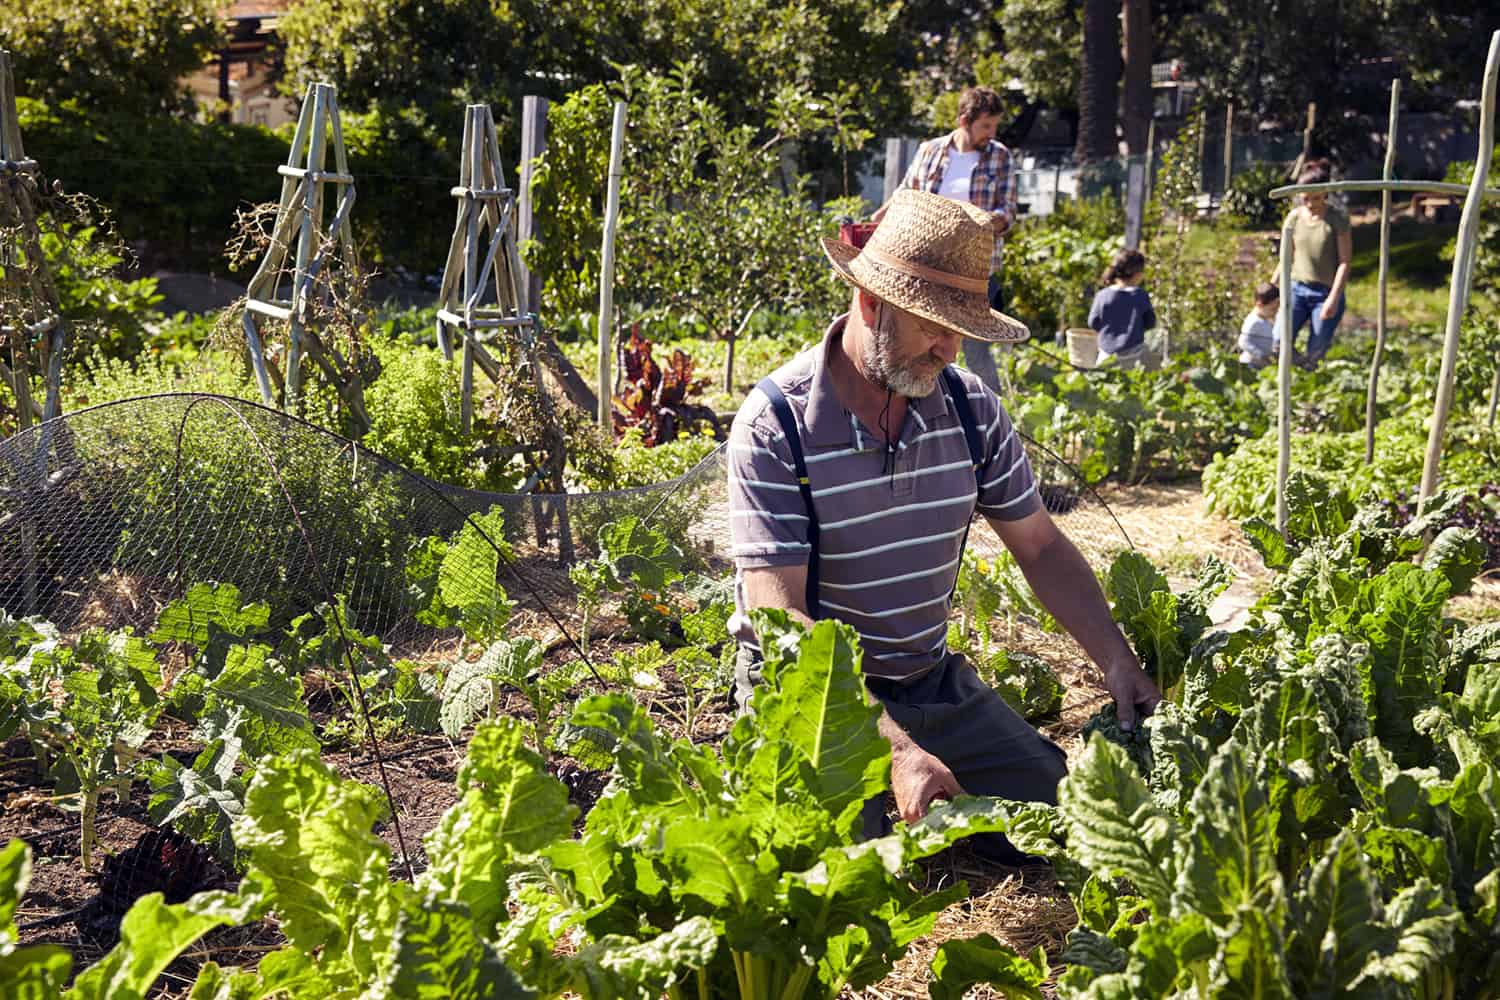 Overcoming addiction through community gardening projects